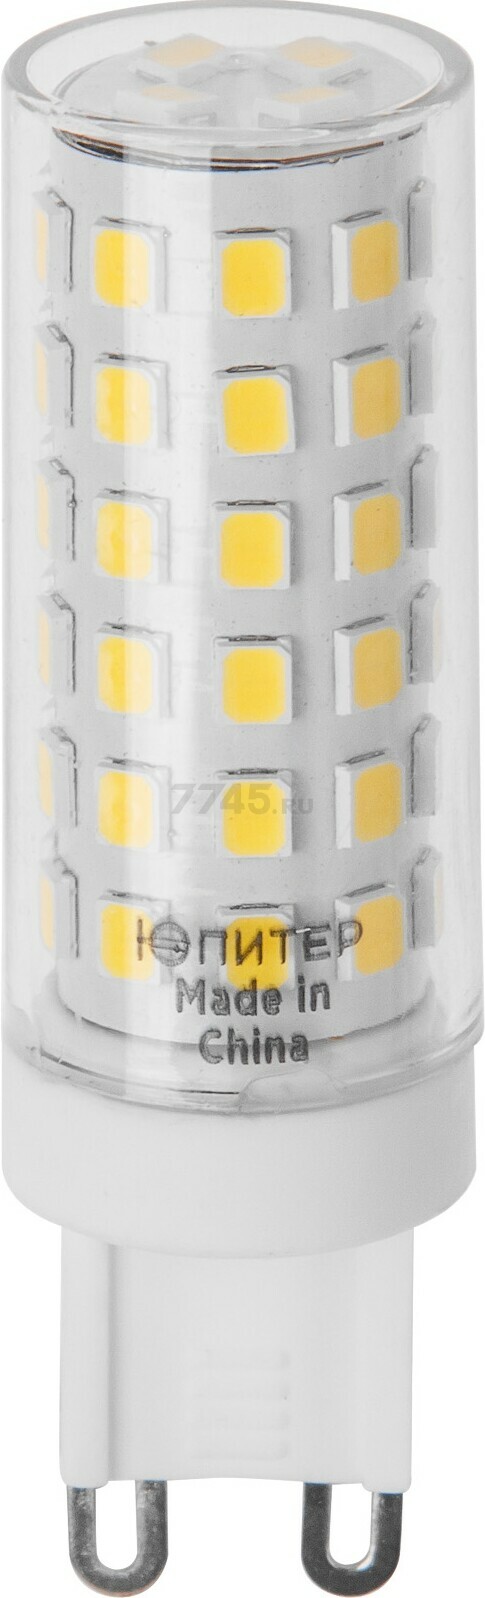 Лампа светодиодная G9 ЮПИТЕР Люкс JCD 9 Вт 3000К (JP5101-35)